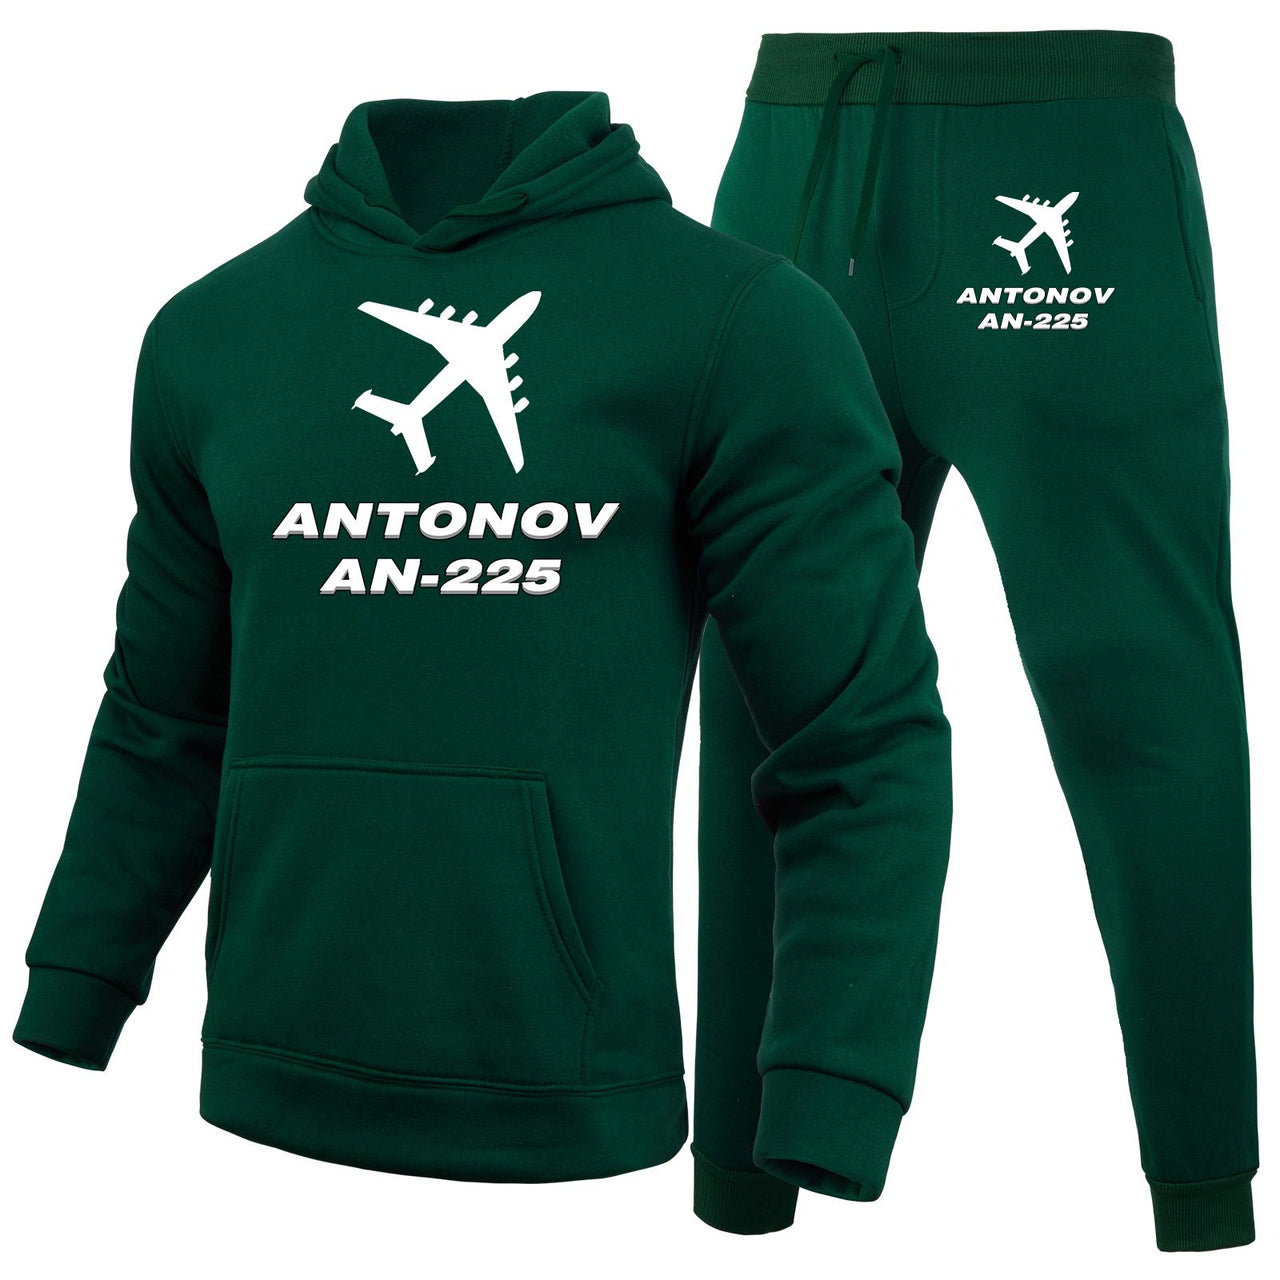 Antonov AN-225 (28) Designed Hoodies & Sweatpants Set